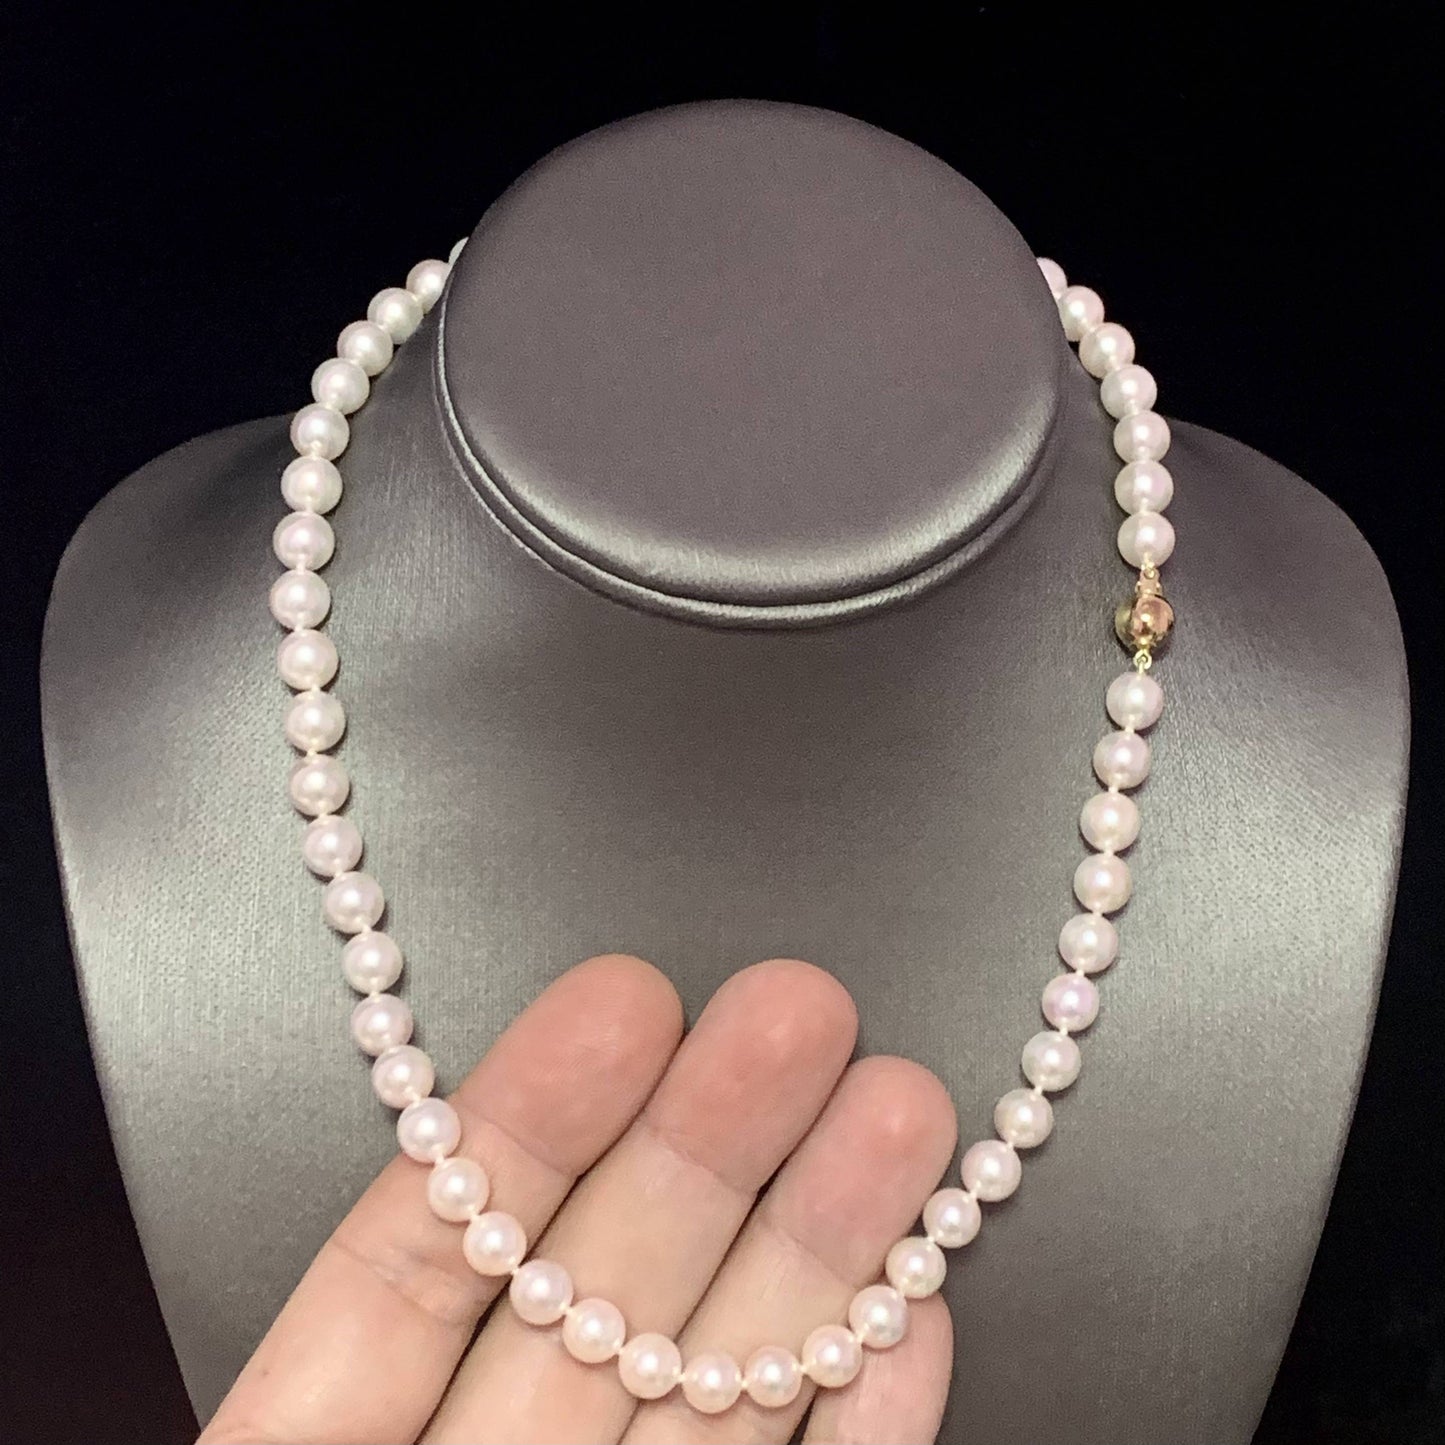 Akoya Pearl Necklace 14k Gold 18" 8.0 mm Certified $3,990 113095 - Certified Estate Jewelry